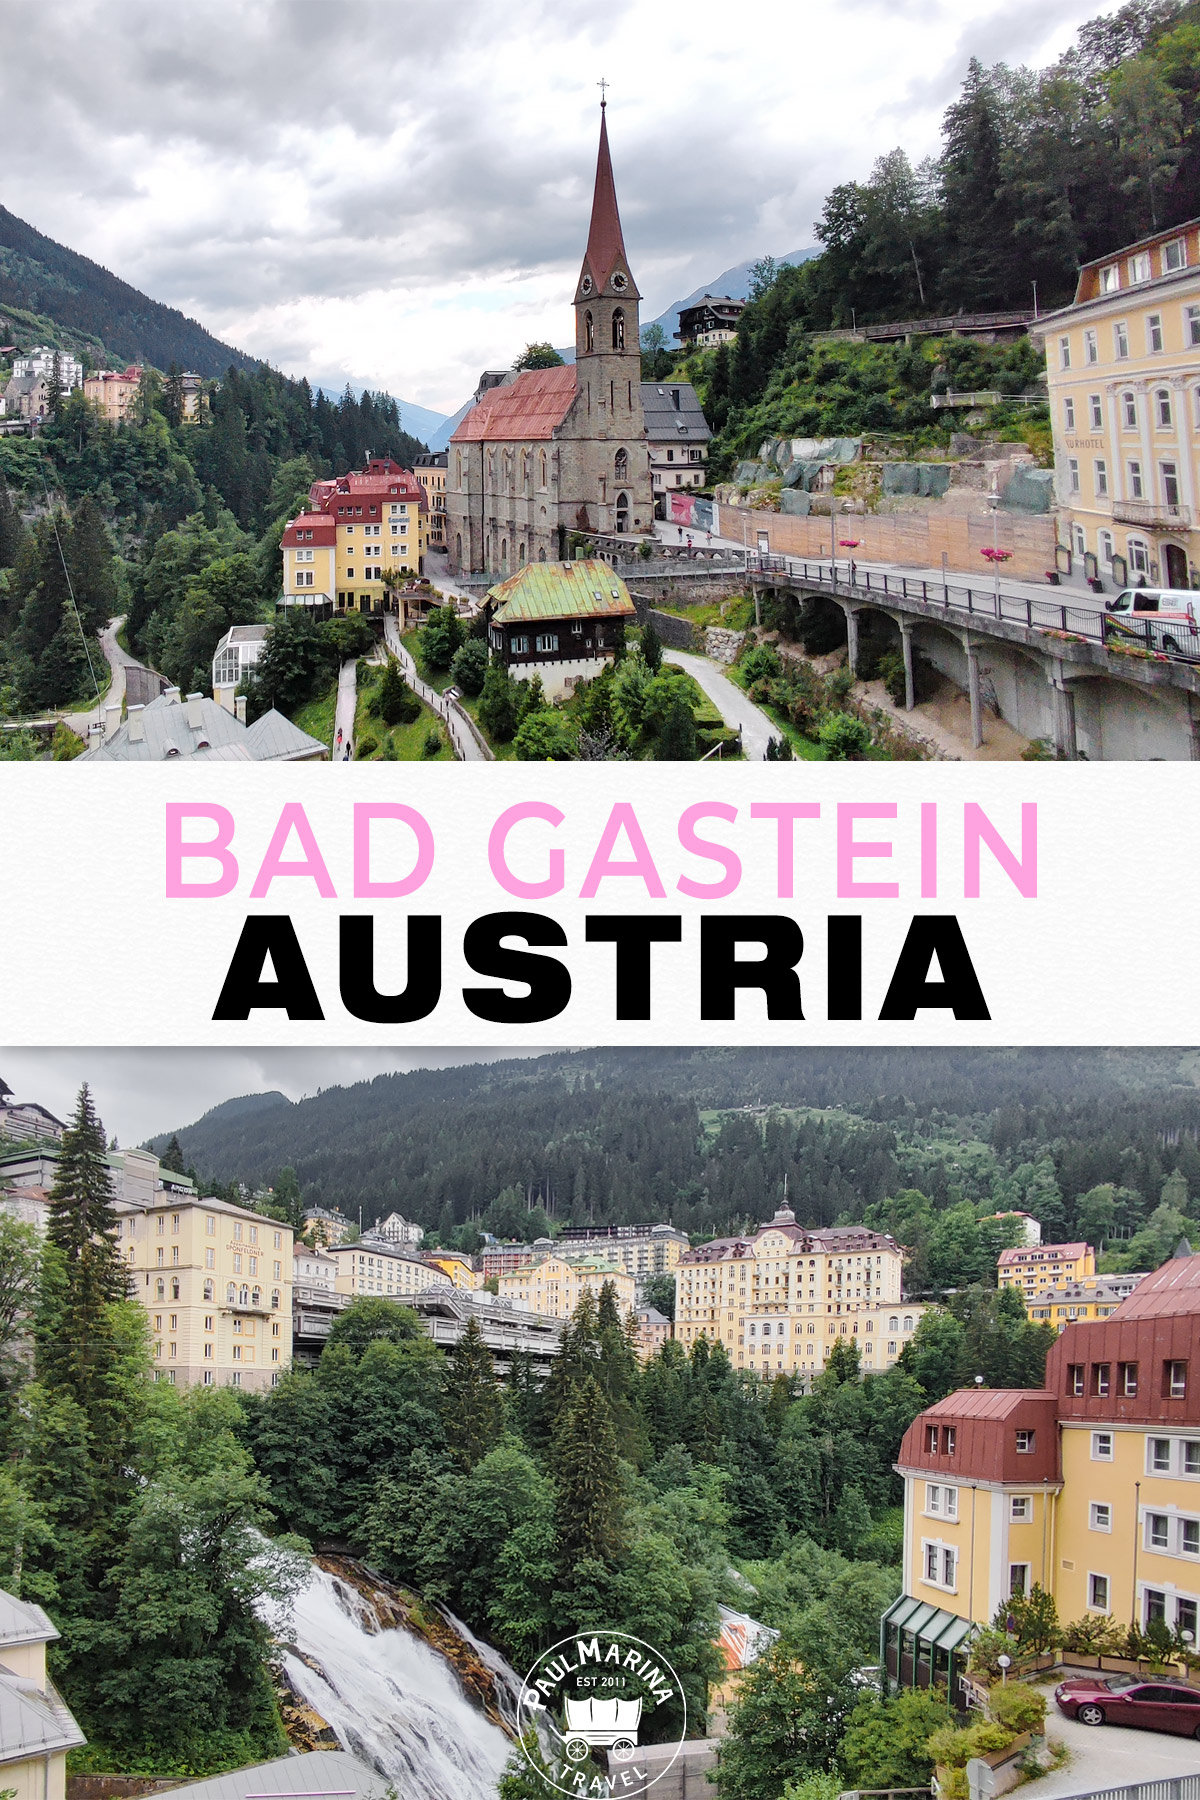 Bad Gastein Austria: The Belle Époque Town pin picture